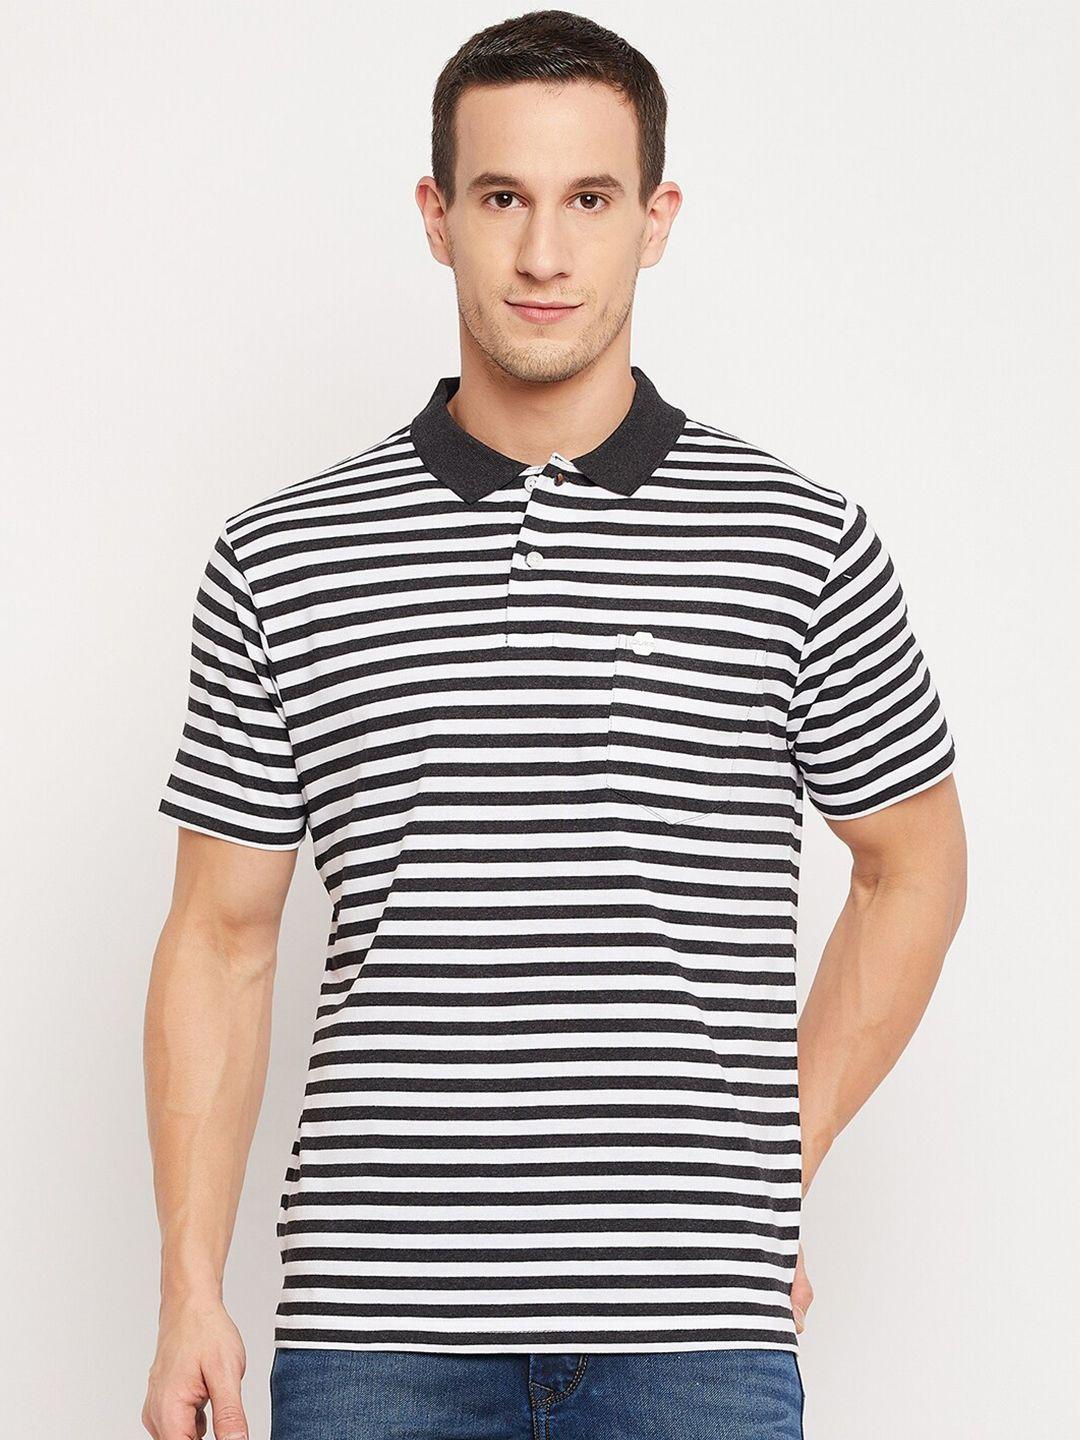 duke-men-grey-striped-polo-collar-monochrome-t-shirt